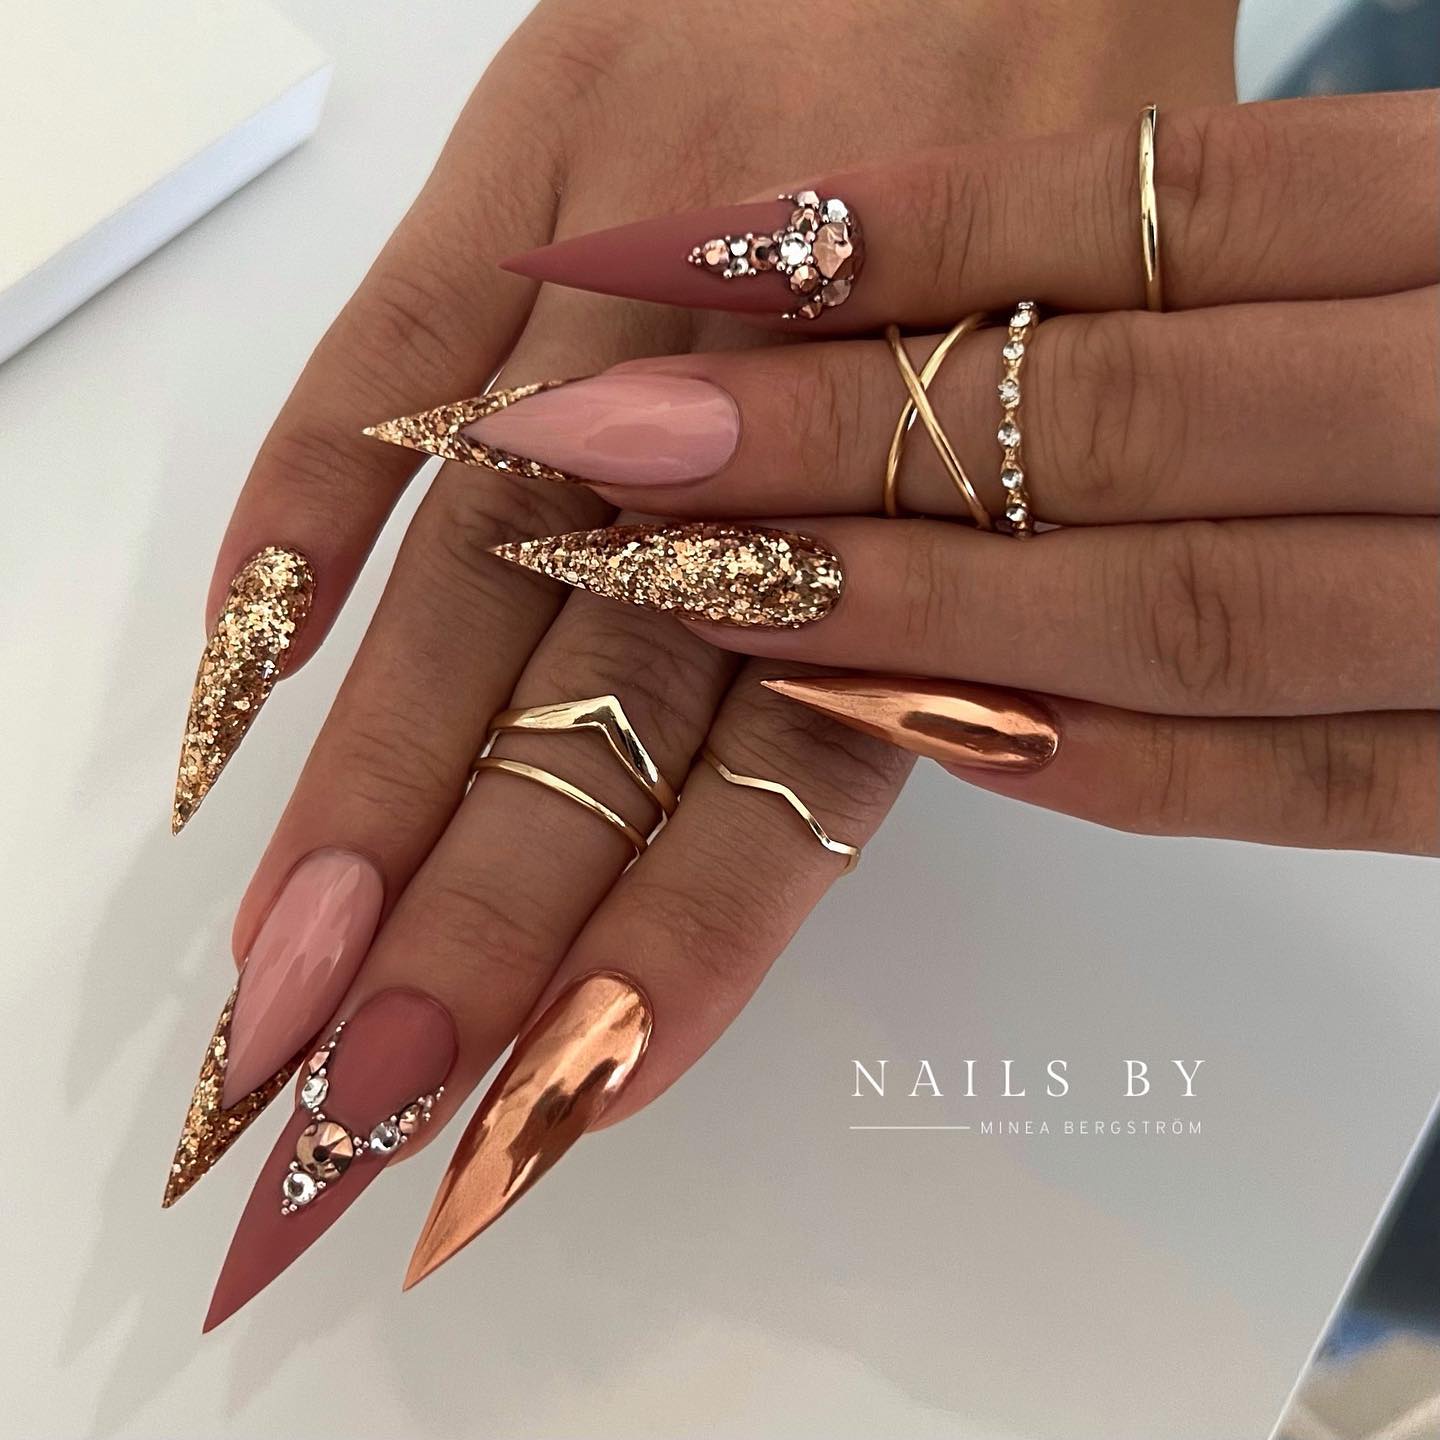 Puntige bruine nagels met gouden glitterontwerp